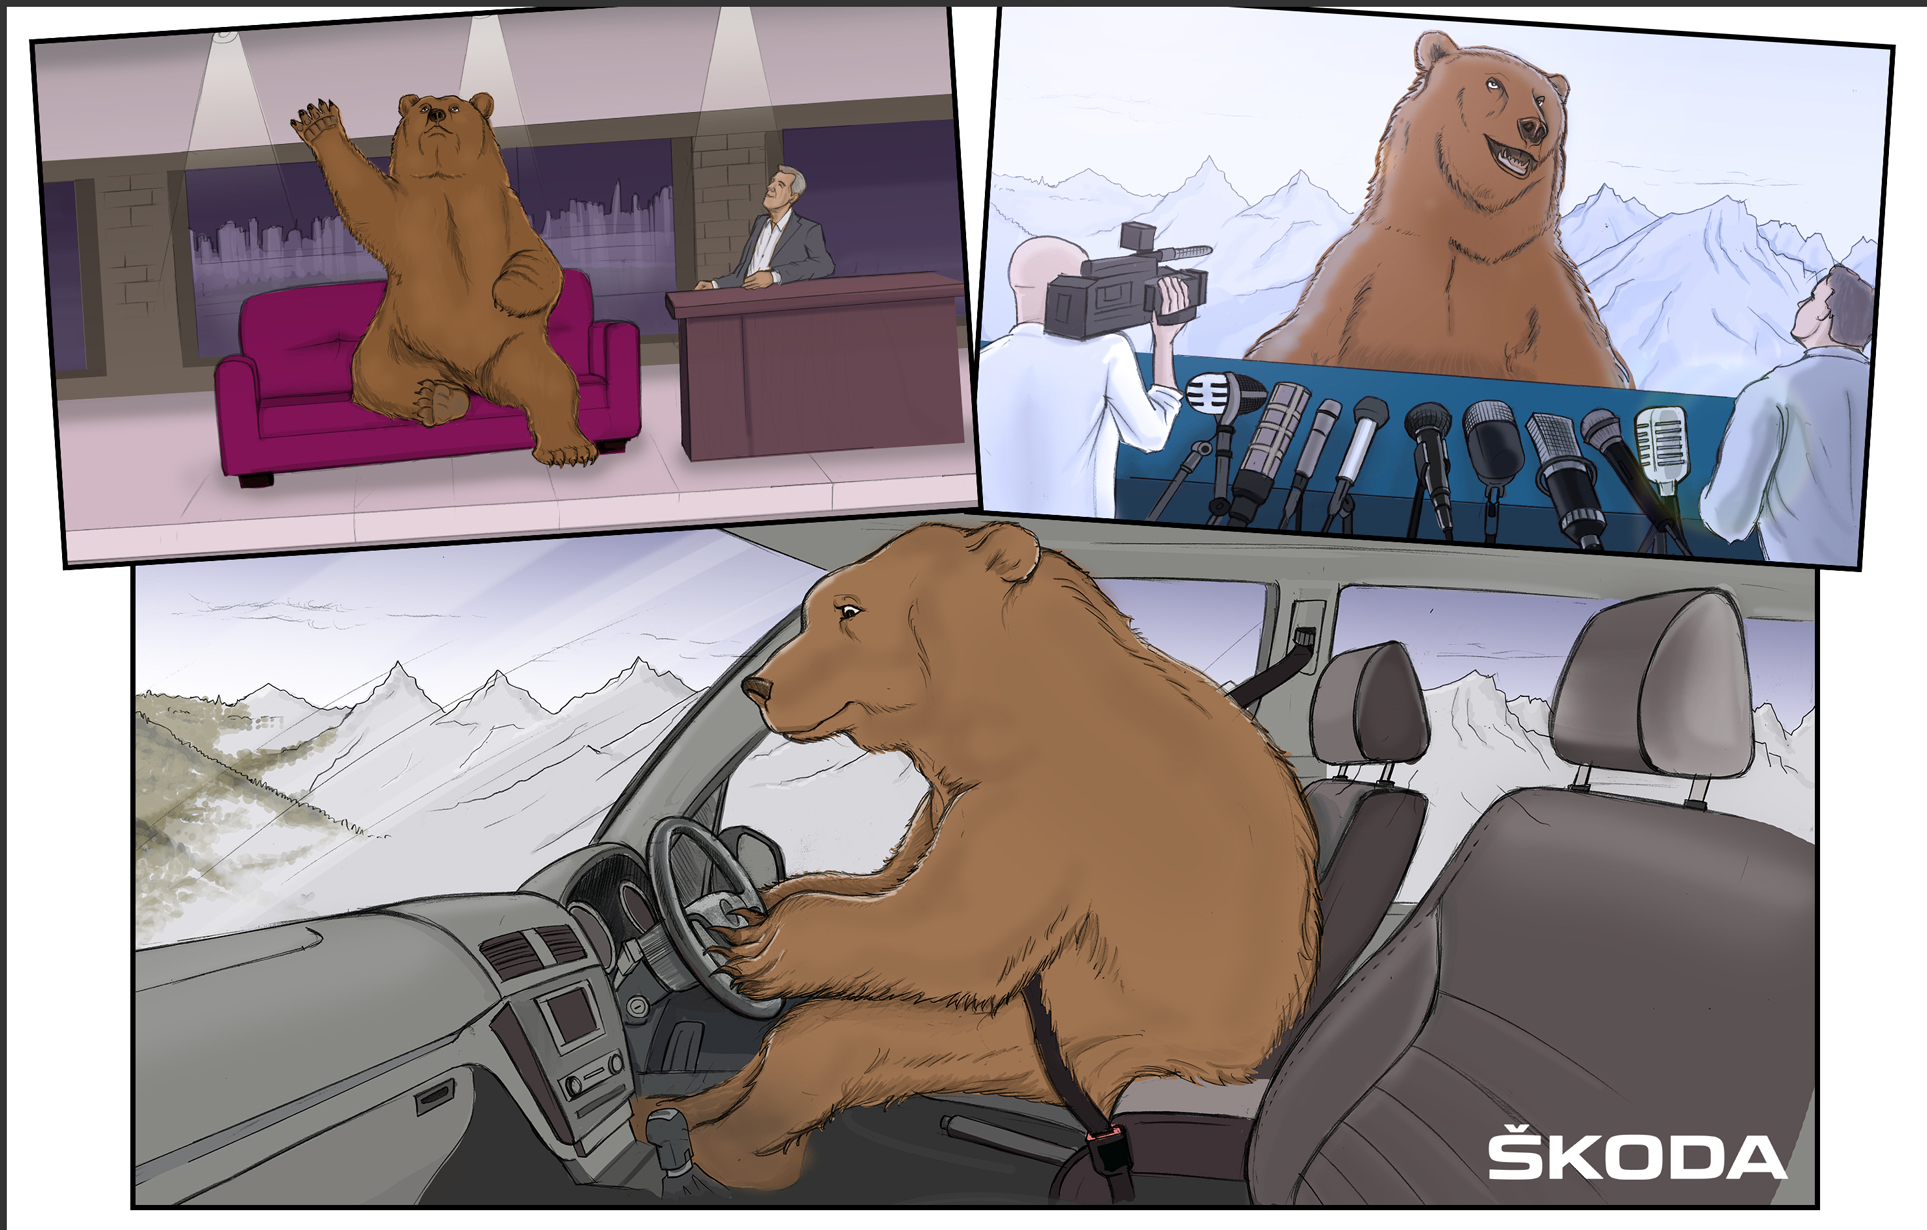 Skoda_bear_storyboard.jpg